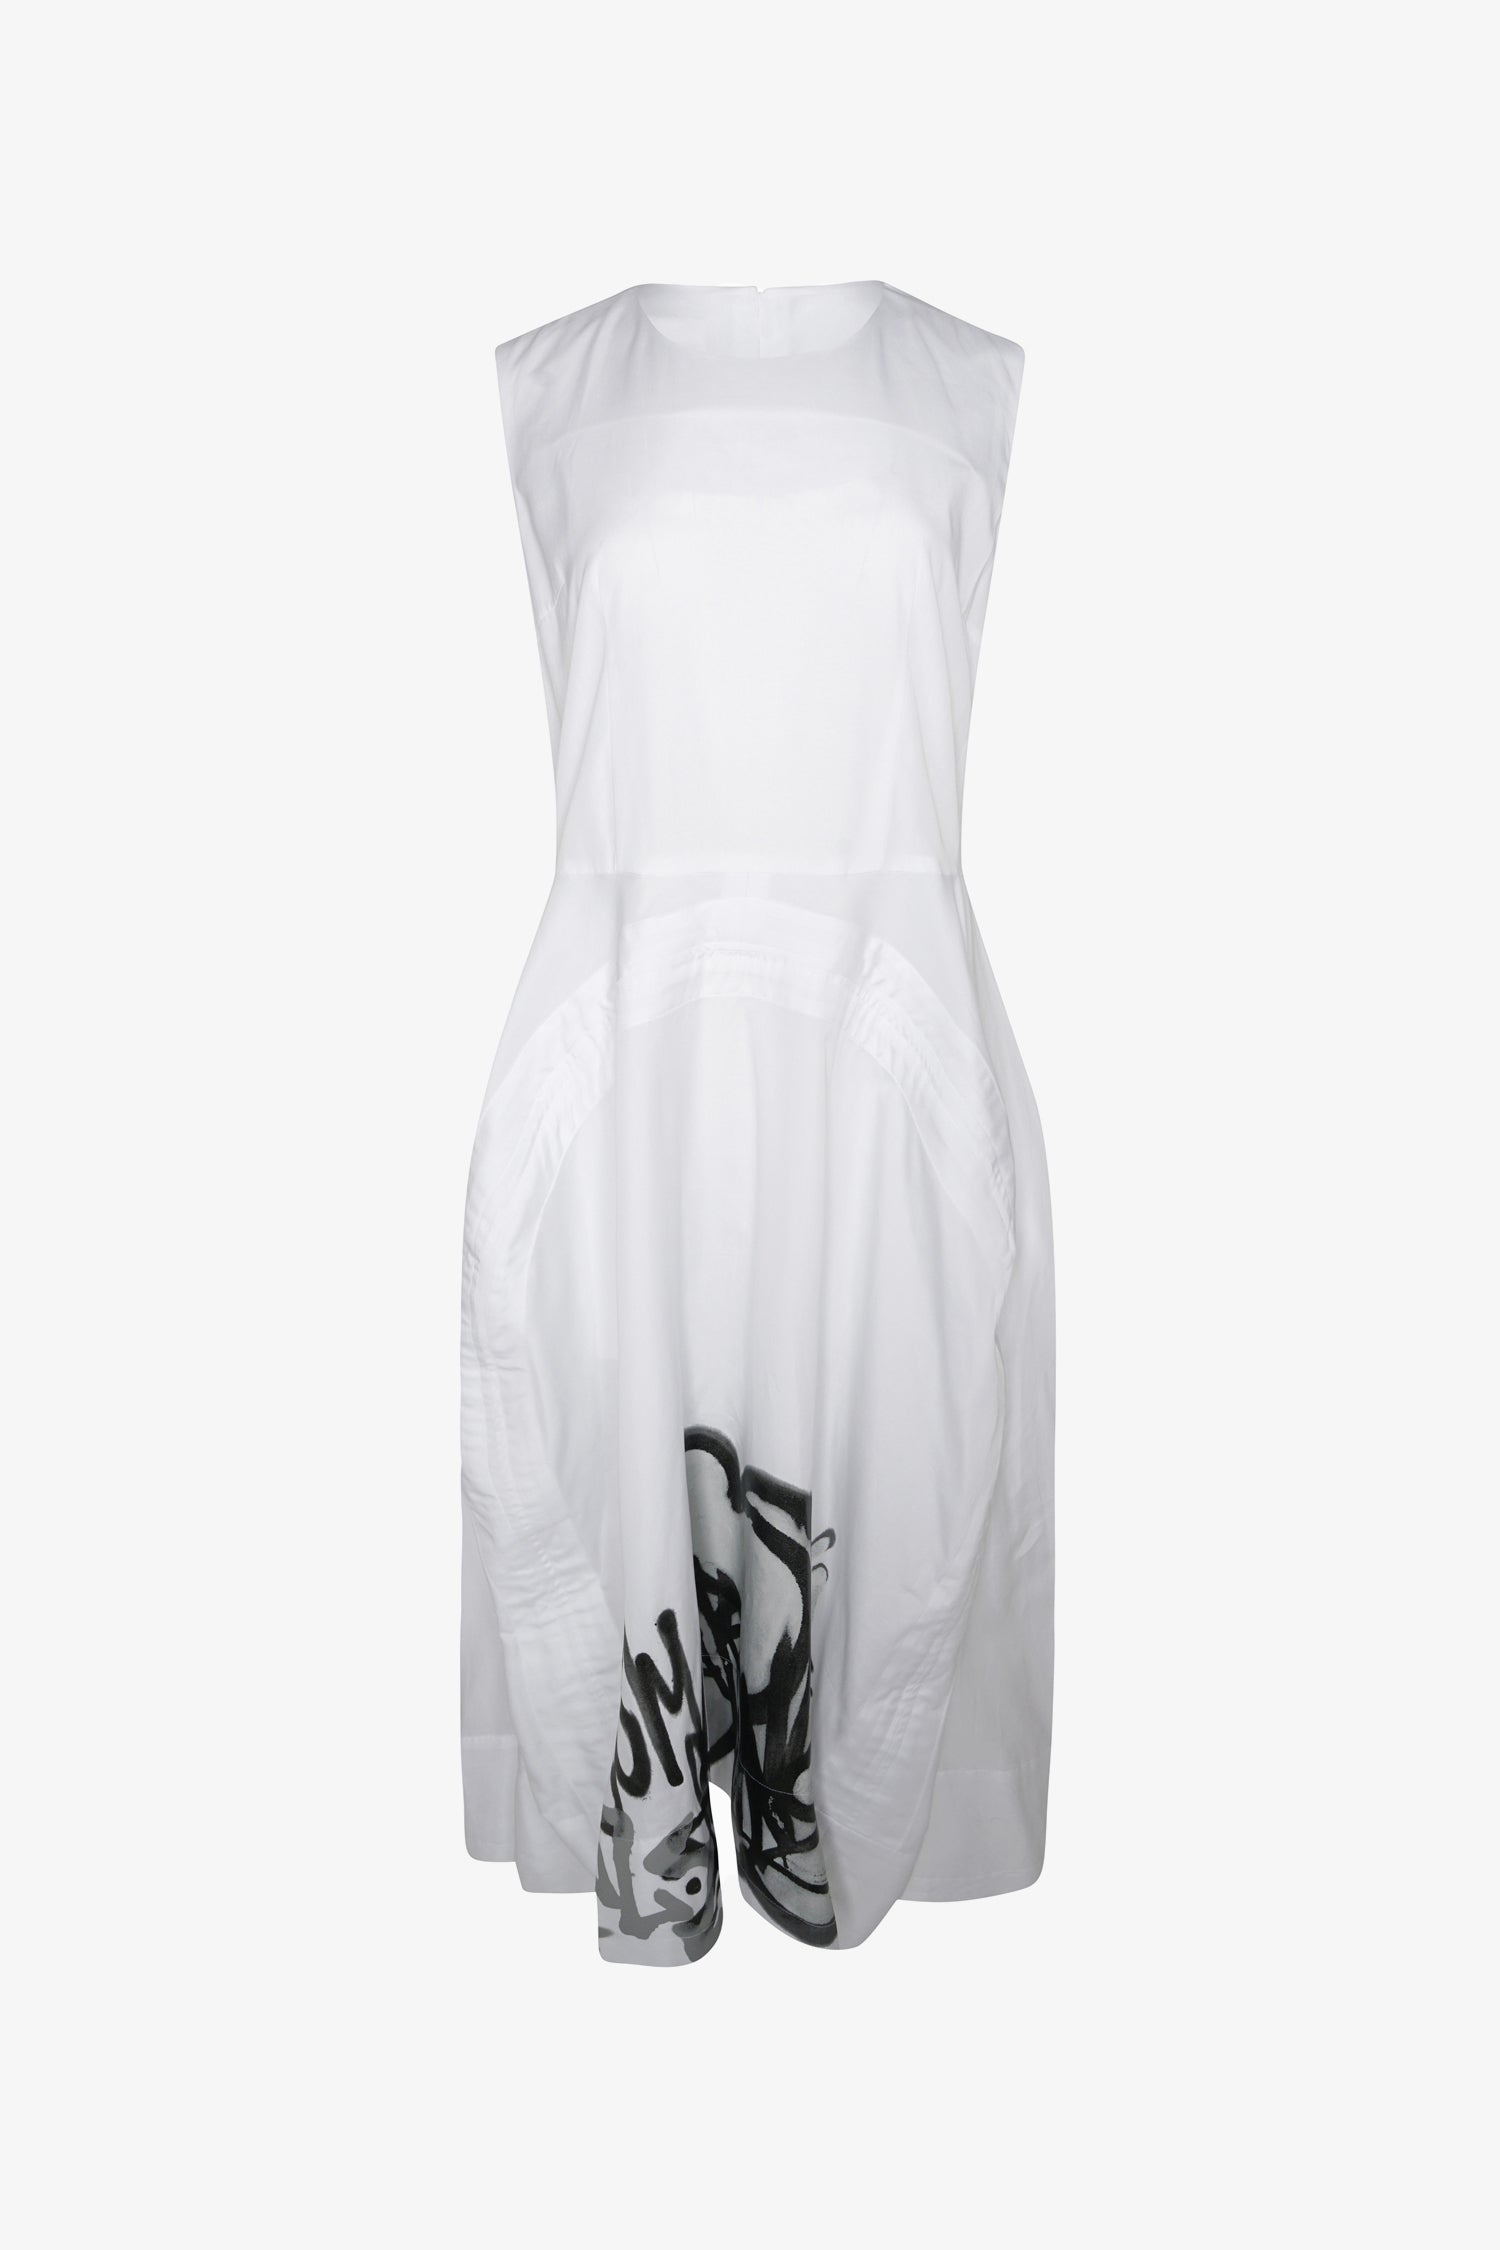 Selectshop FRAME - COMME DES GARÇONS Graffiti Sleeveless Dress Dresses Dubai